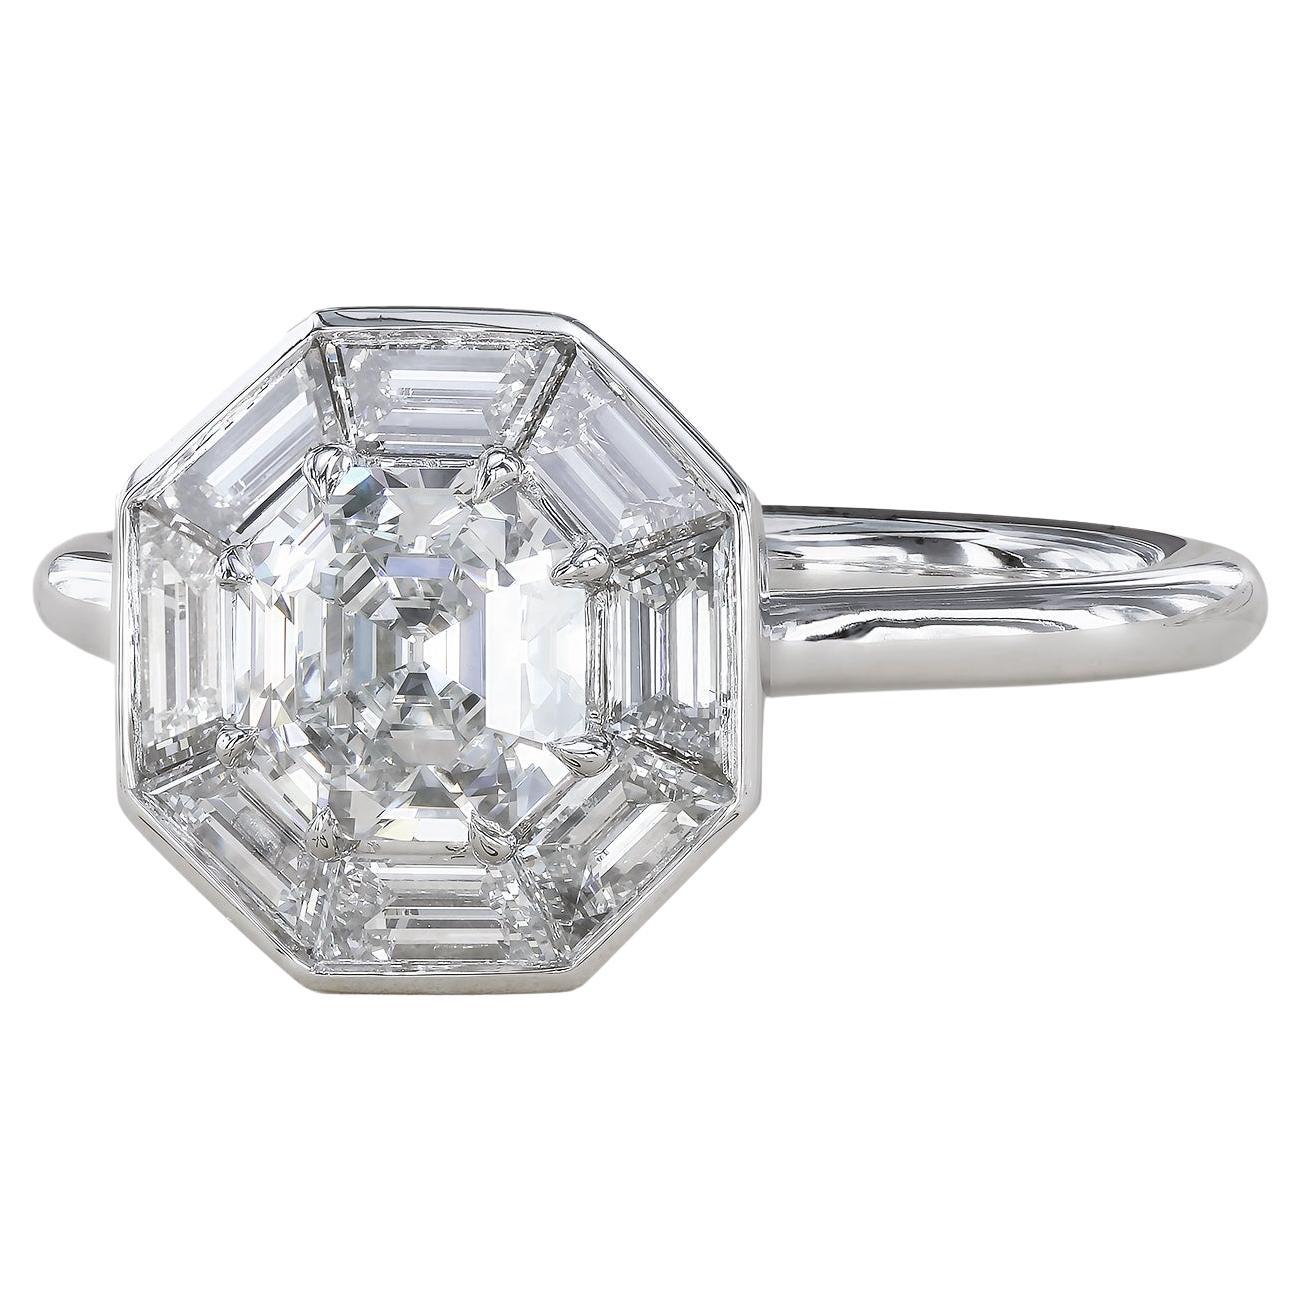 Leon Mege platinum ring solitaire with certified 1.83 ct Asscher cut diamond  For Sale